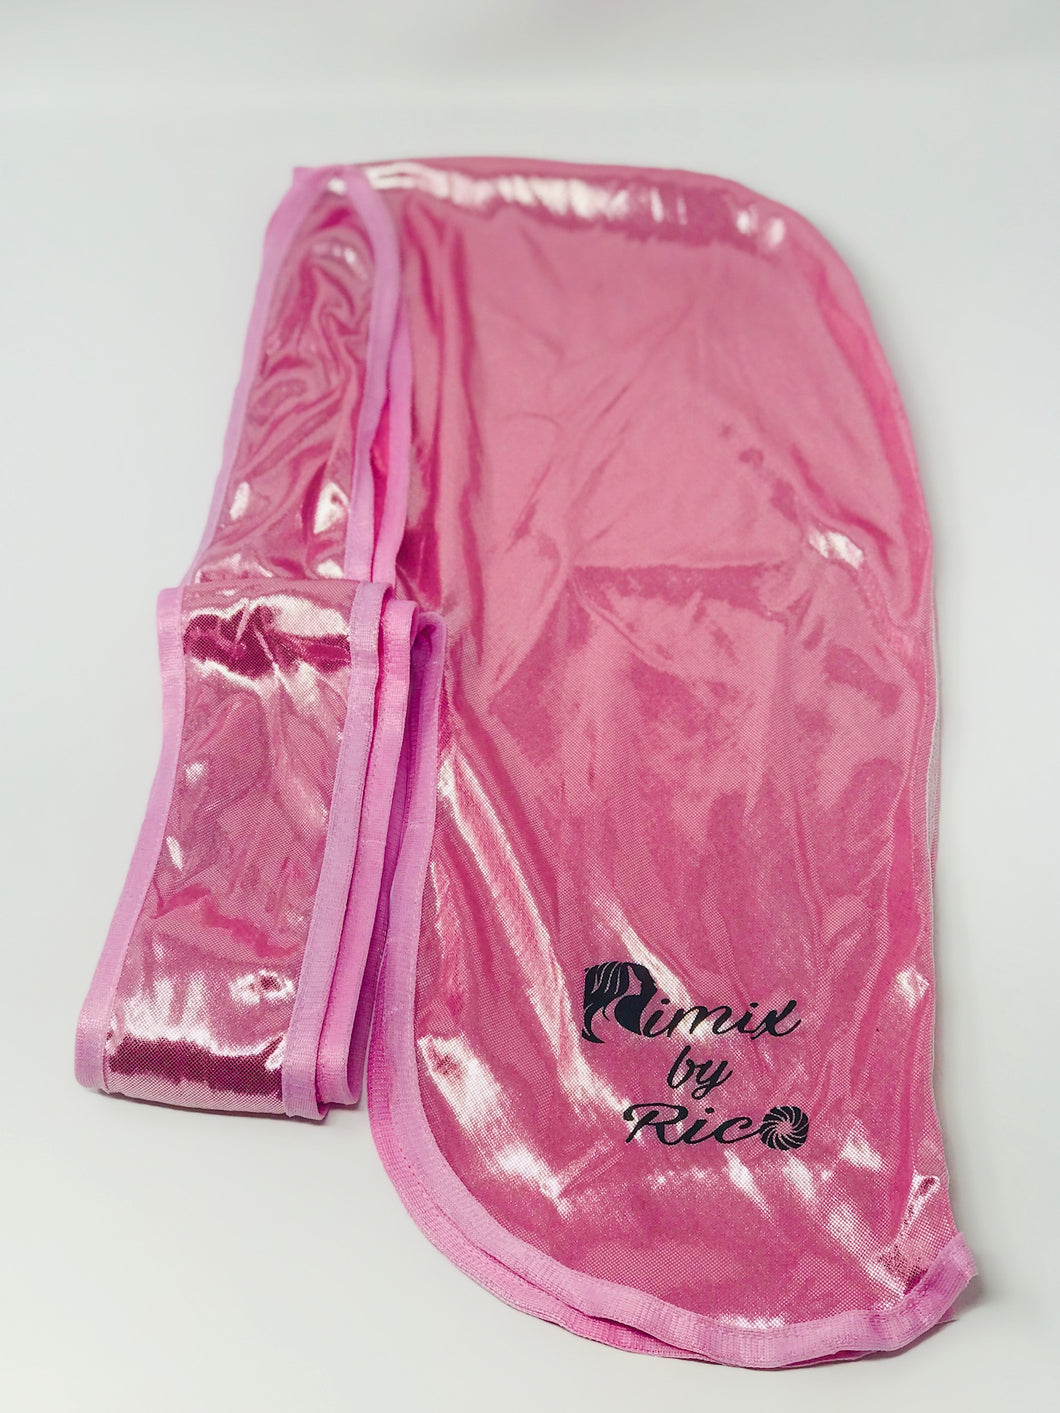 Rimix 8K Ultra Tuxedo Durag**Limited Edition - Pink/Pink Trim